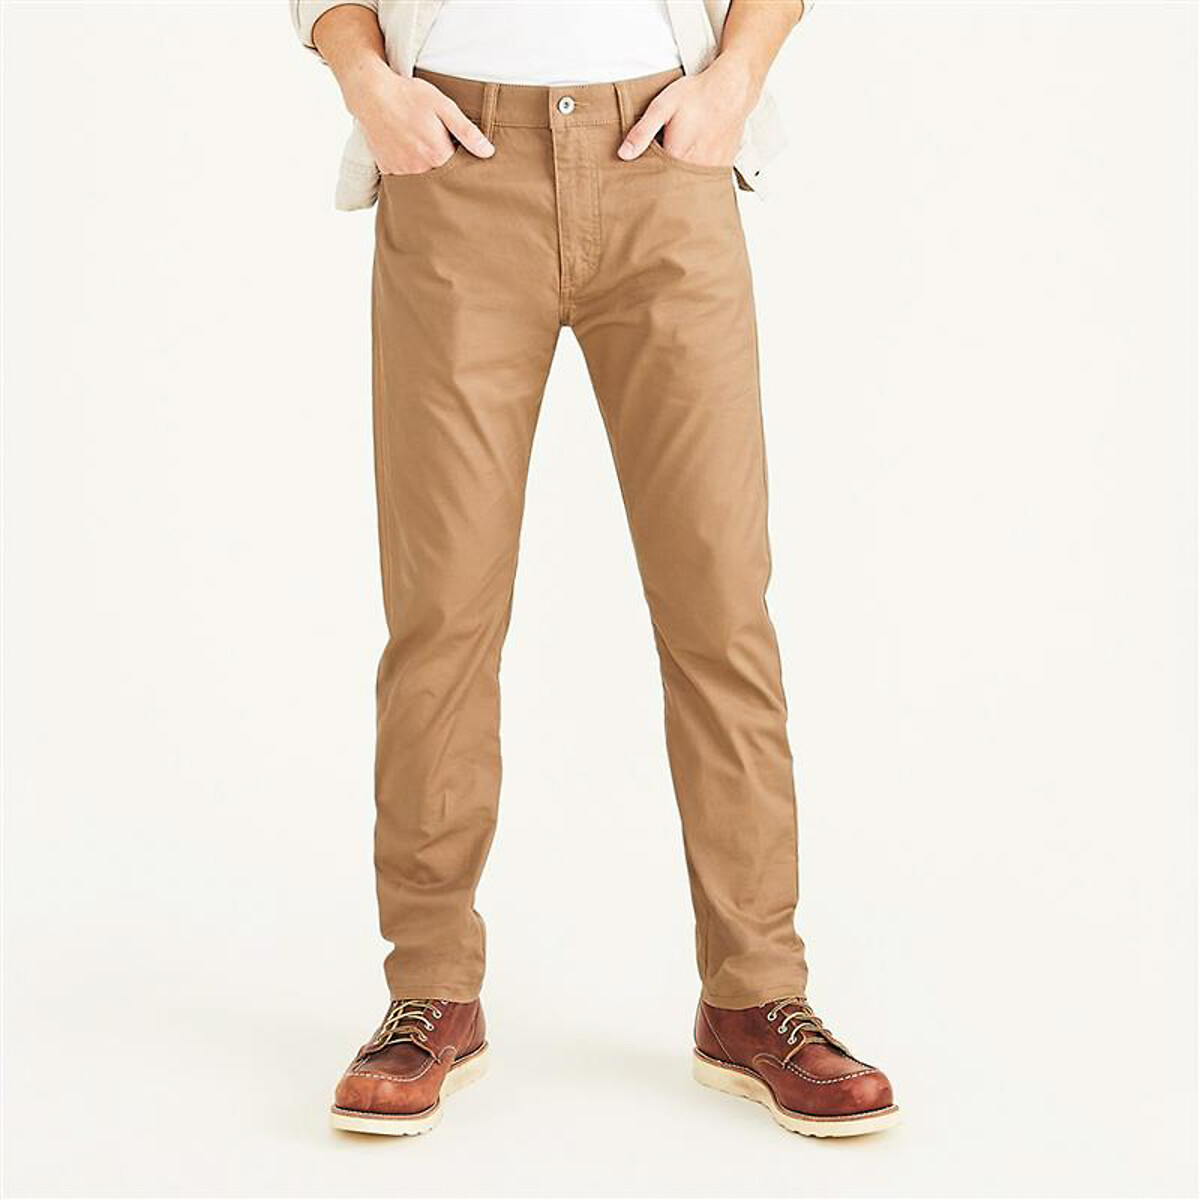 Dockers Men's Comfort Knit Trouser Straight Fit Smart 360 Knit Pants,  Timberwolf, 30Wx32L at Amazon Men's Clothing store